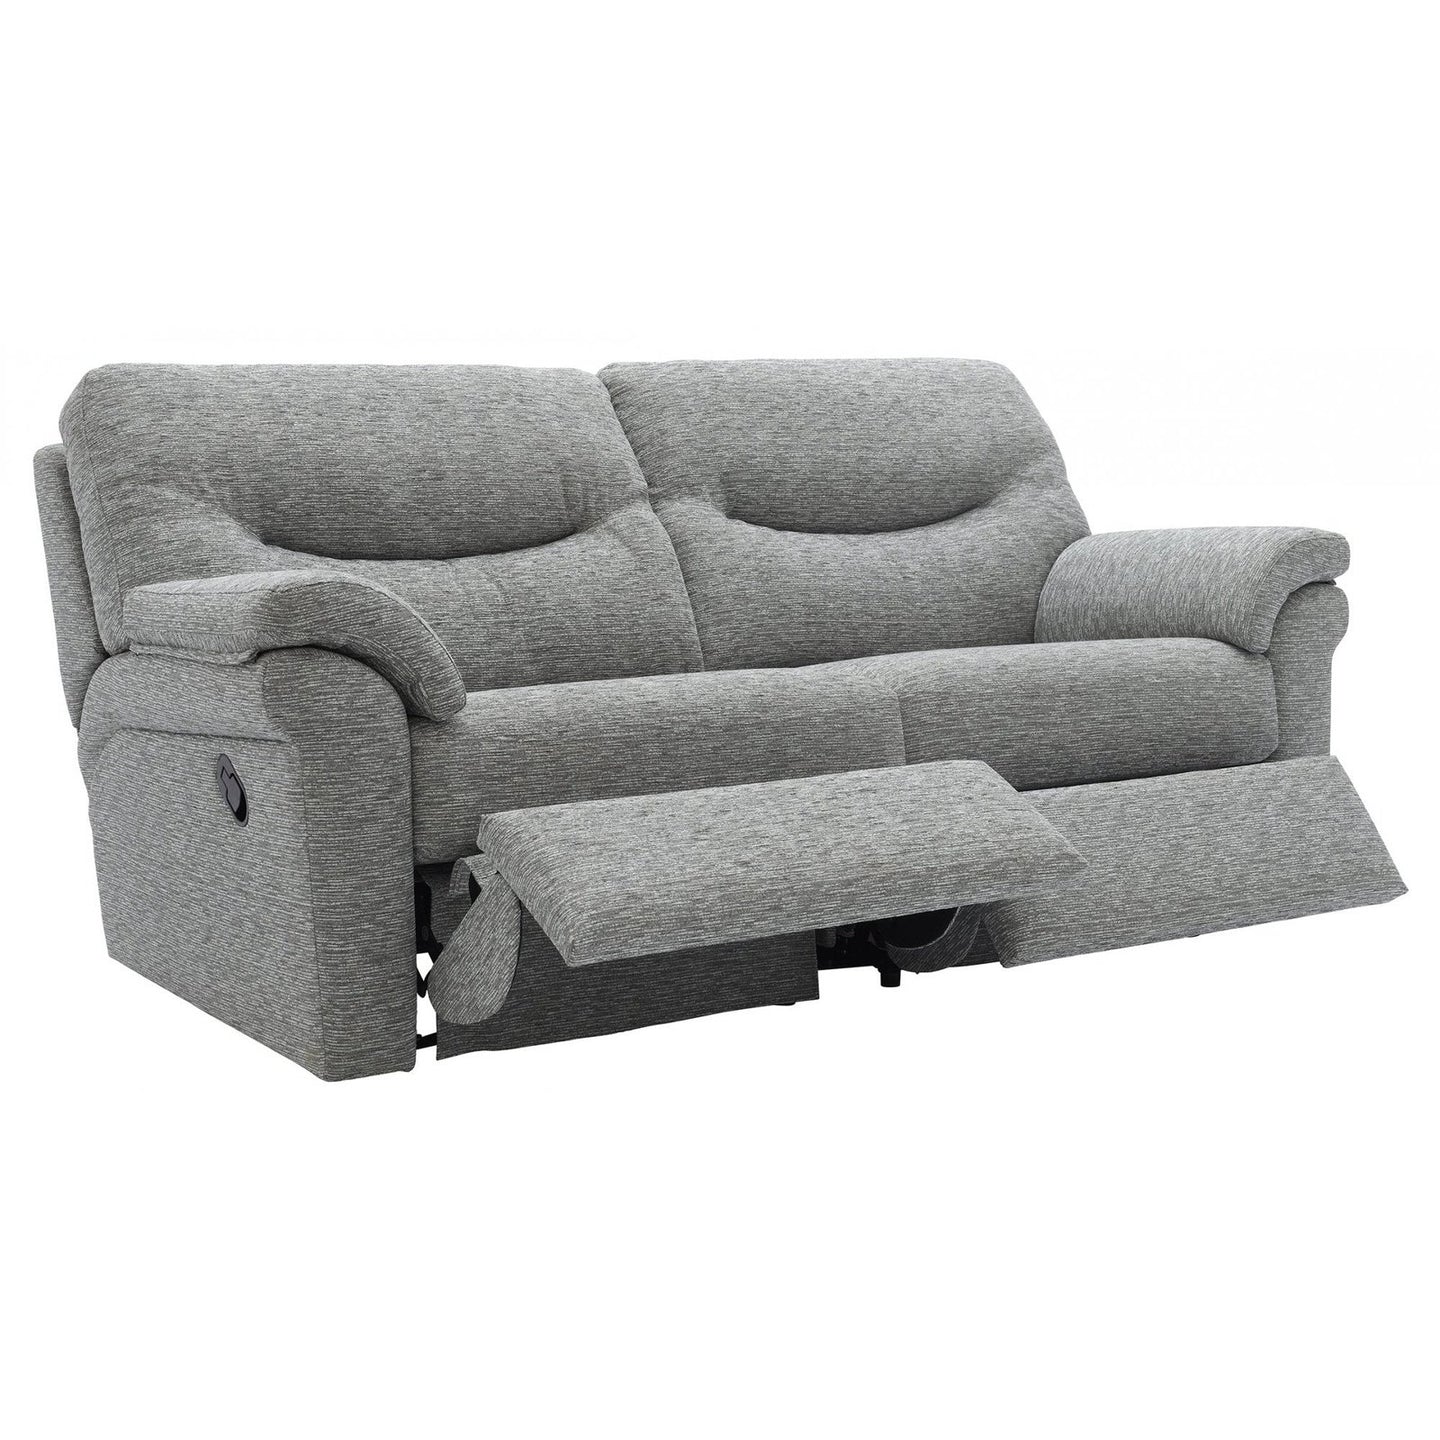 G Plan Washington Fabric 2 Seater Manual Recliner Sofa